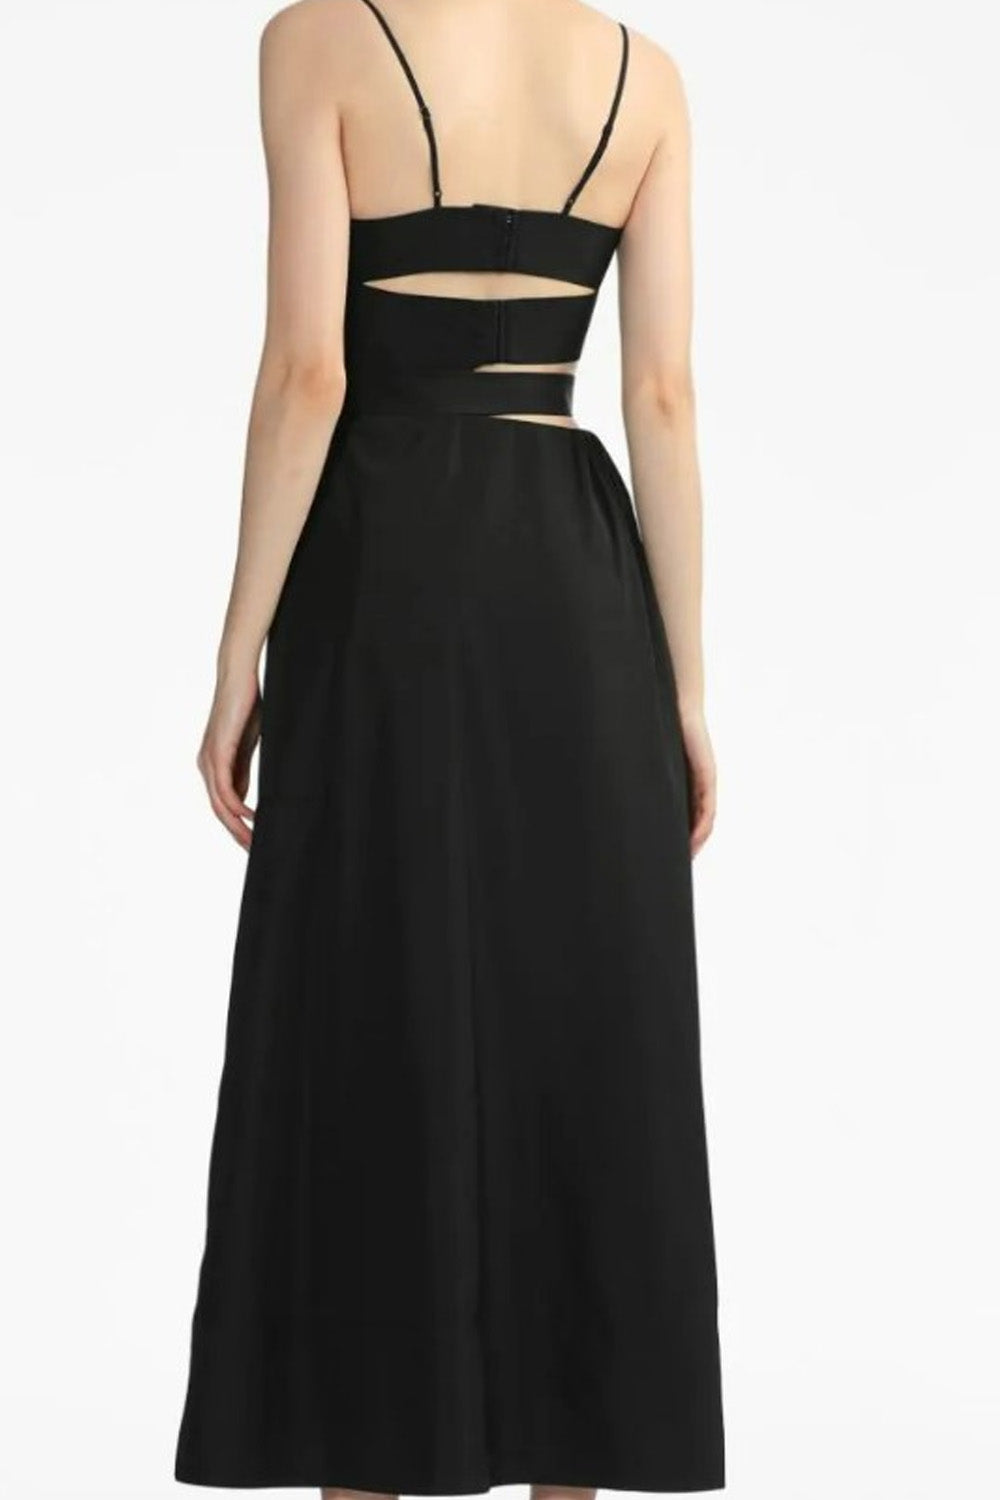 Lily Black Dress